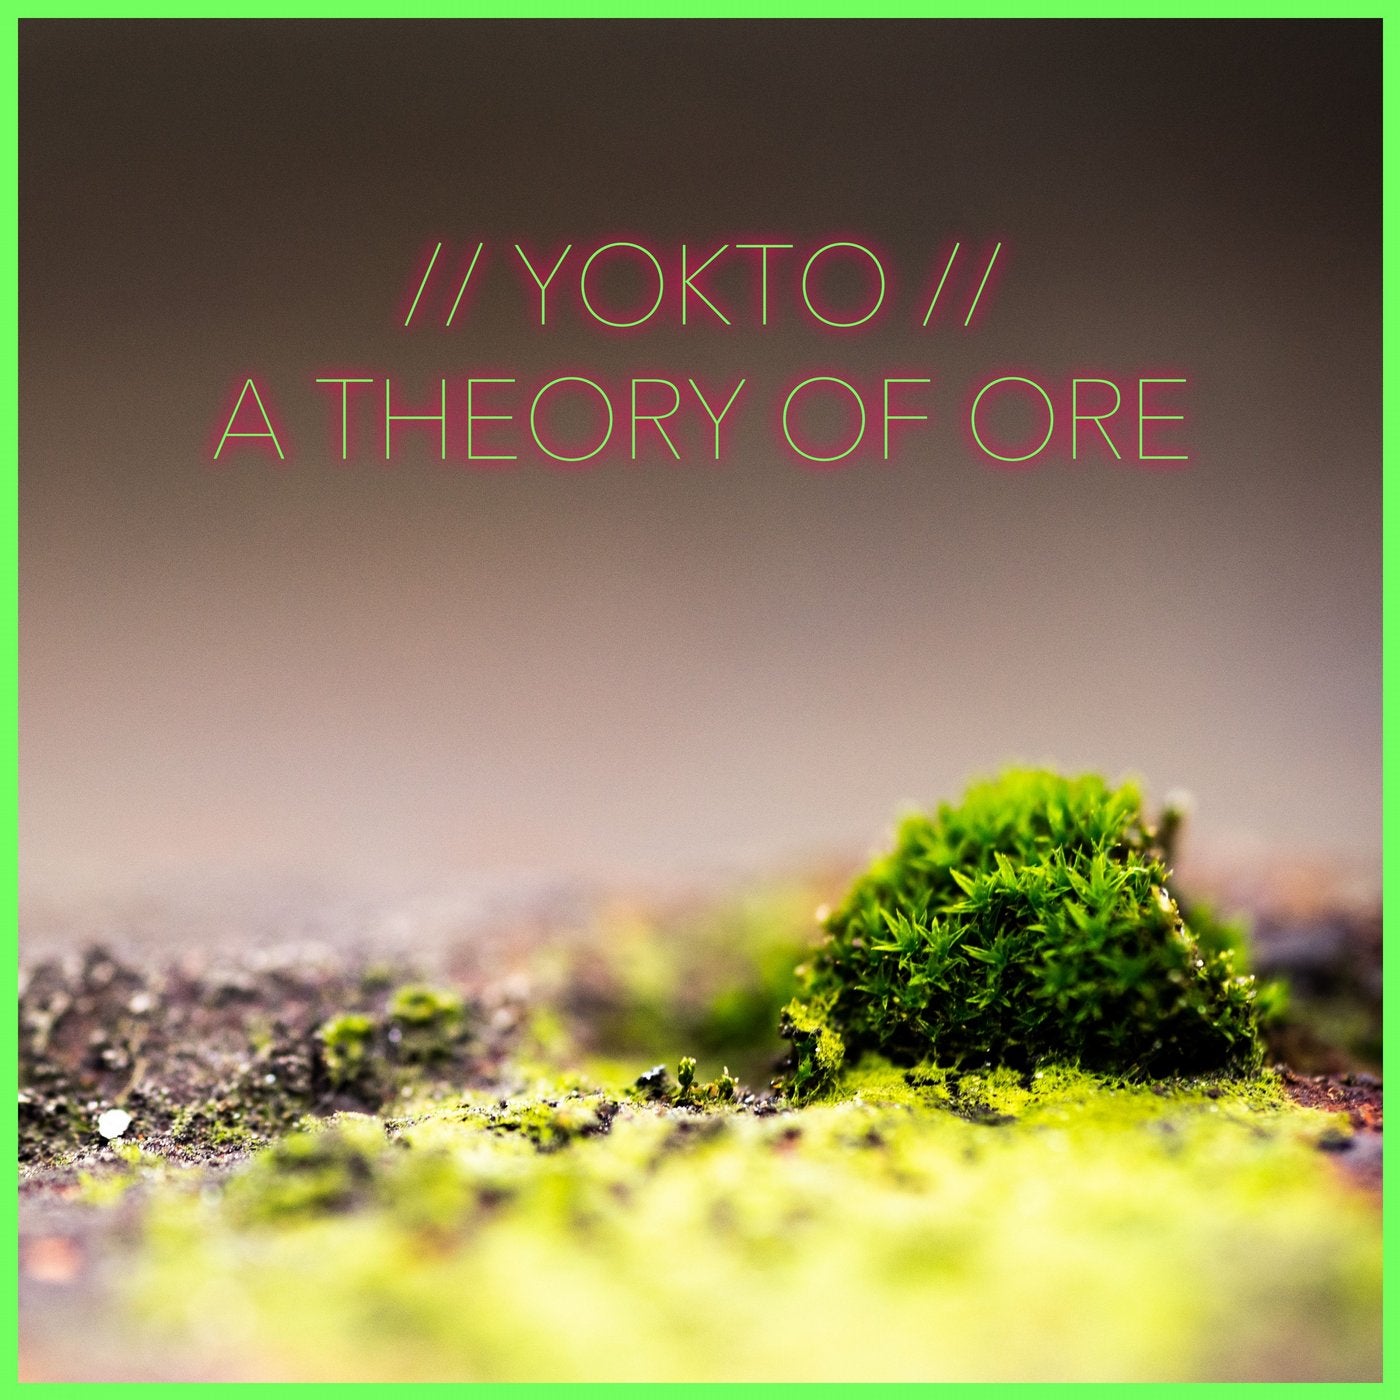 A Theory Of Ore